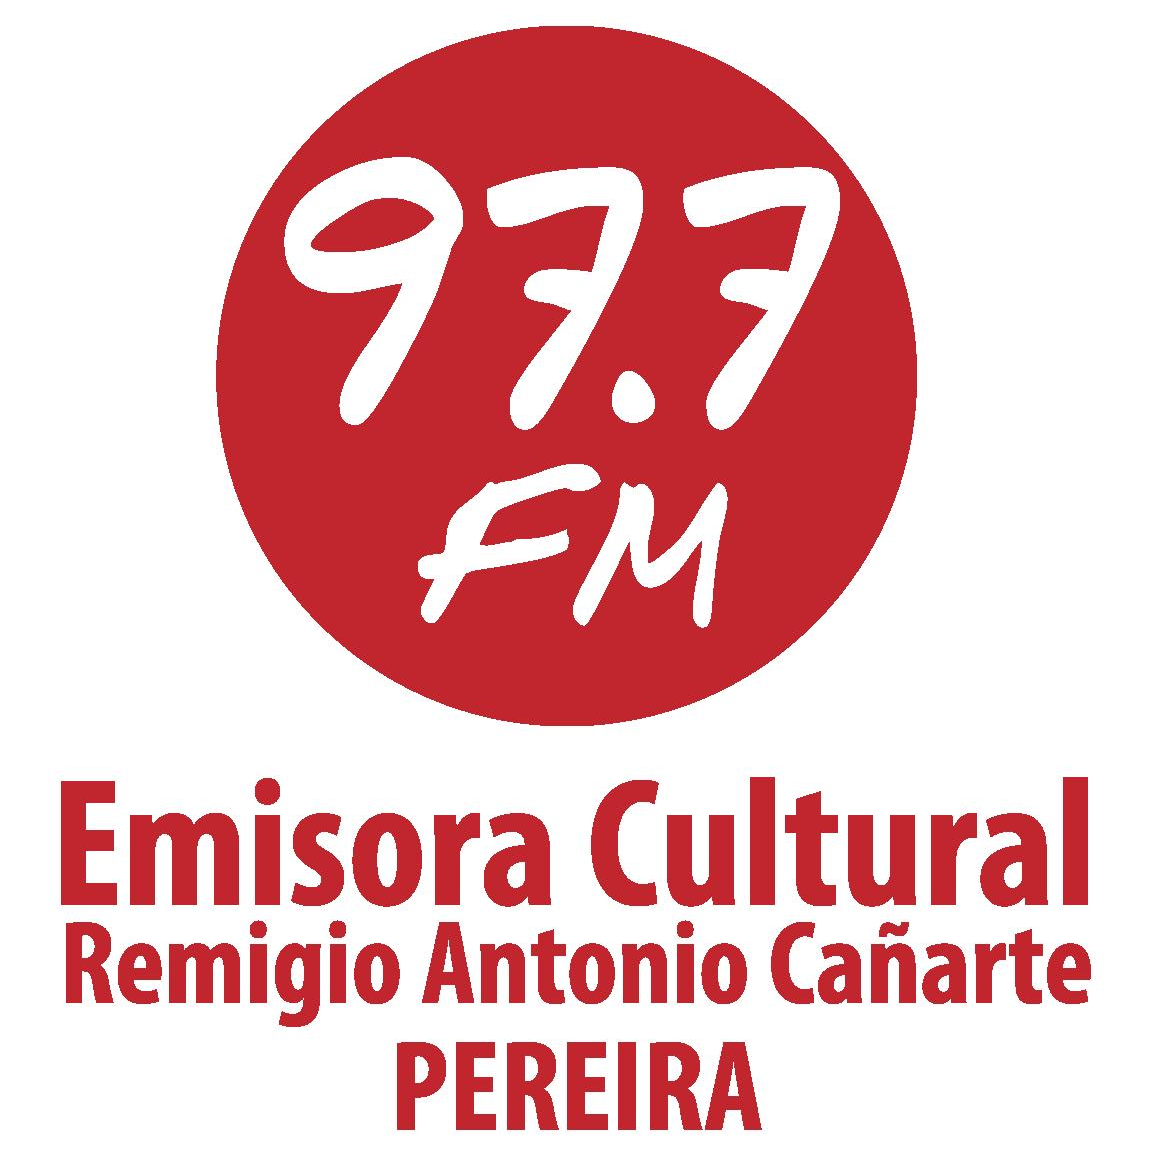 Emisora Cultural de Pereira 97.7 F.M.